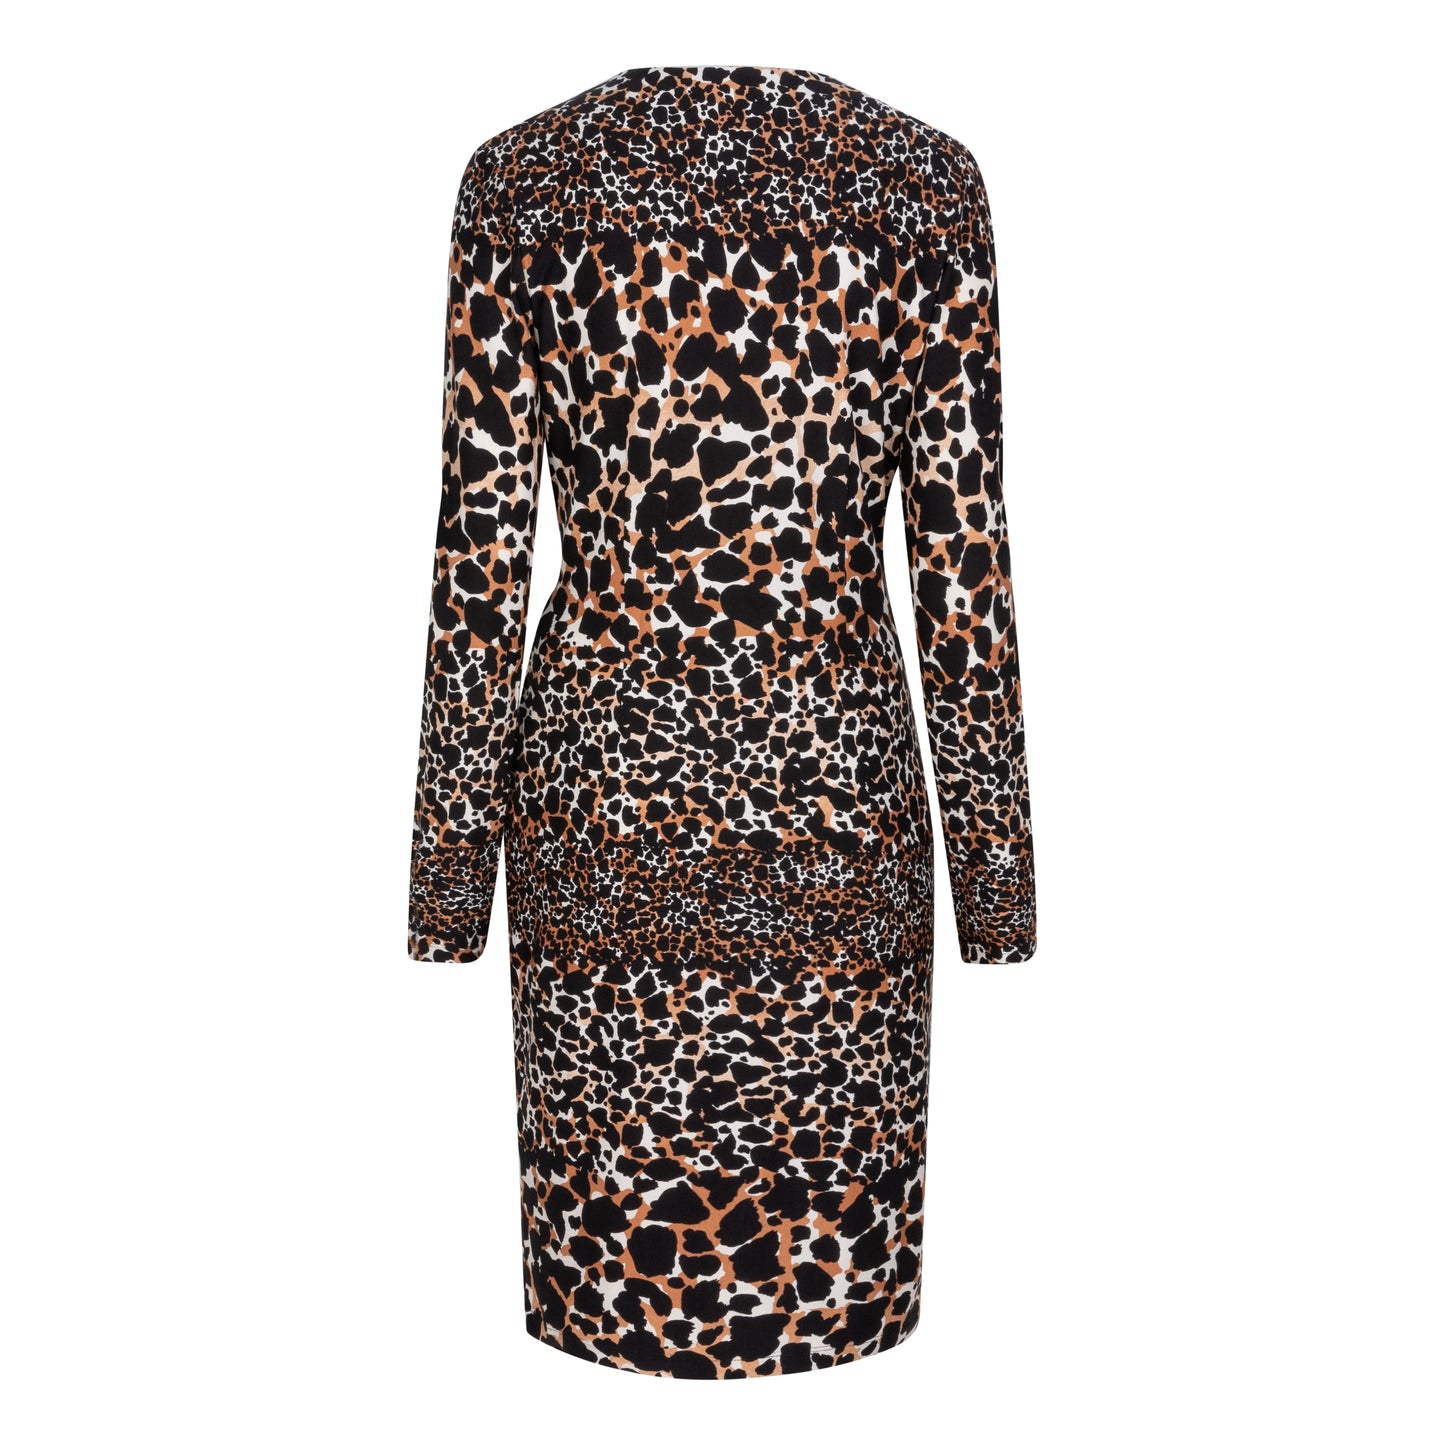 ESQUALO Scattered Illusion Leopard Print Dress